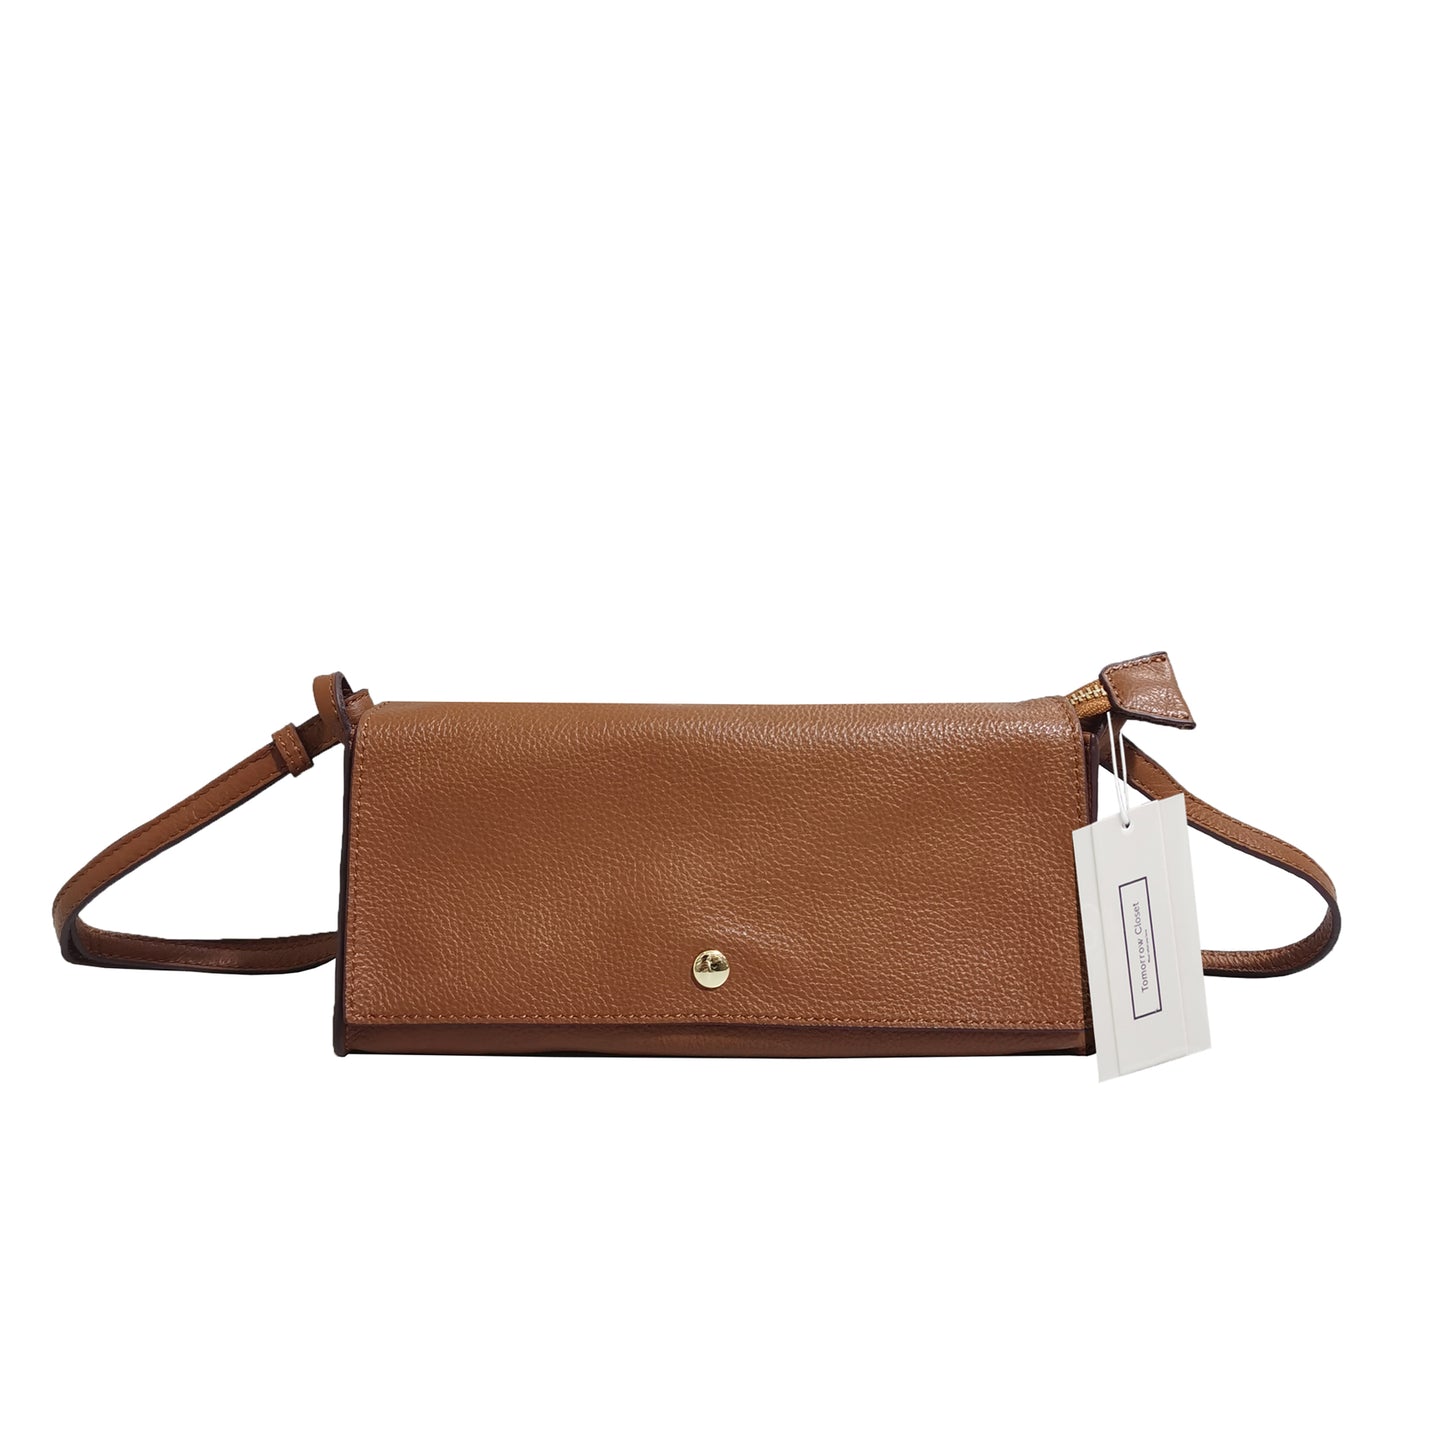 Women's genuine cowhide leather handbag Sternite design by Tomorrow Closet